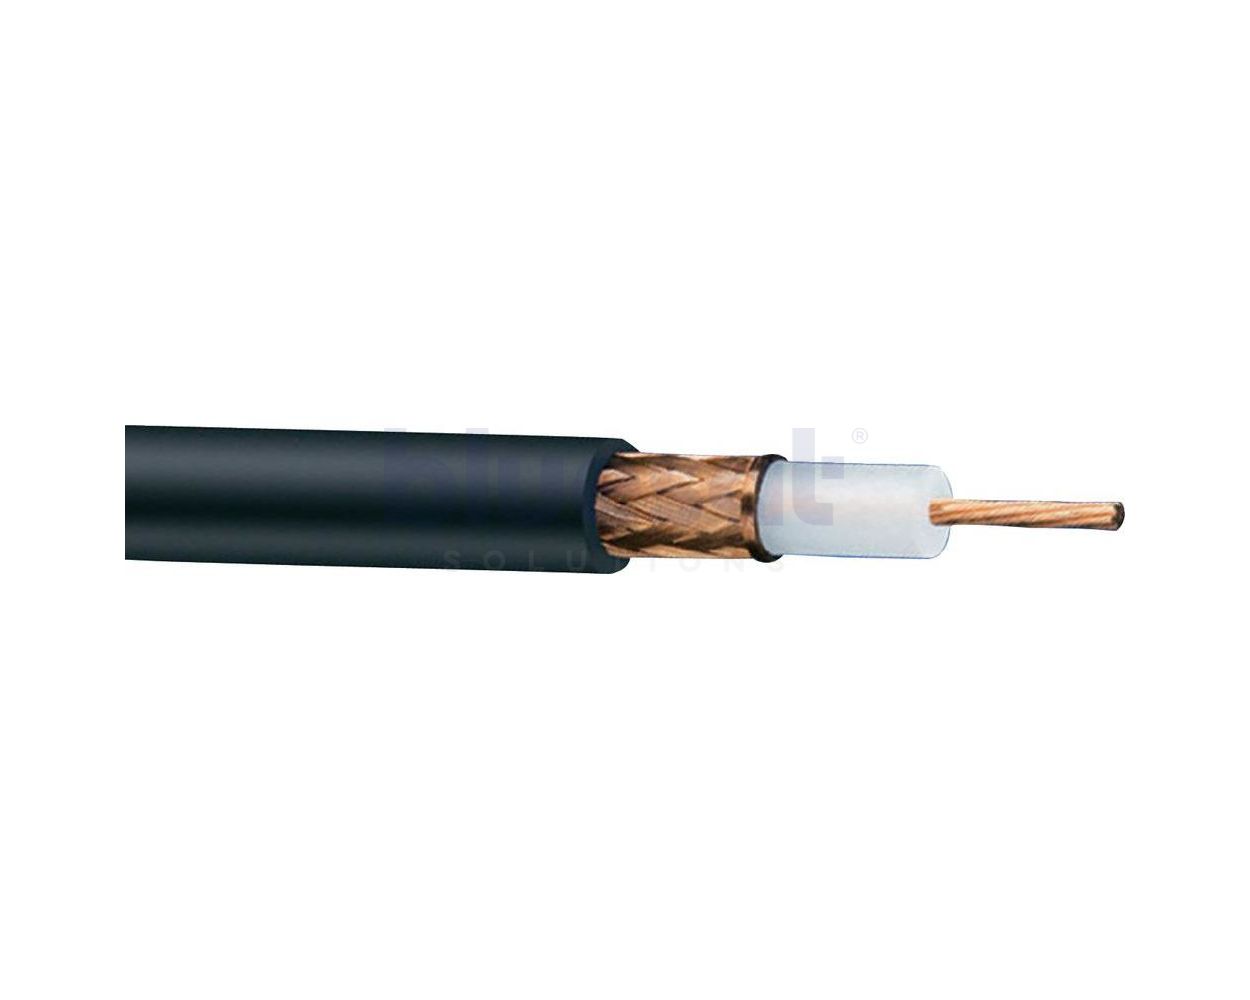 nestati napasti ukrasni  Coax cable RG 213/U for SAILOR 6300 Series per metre